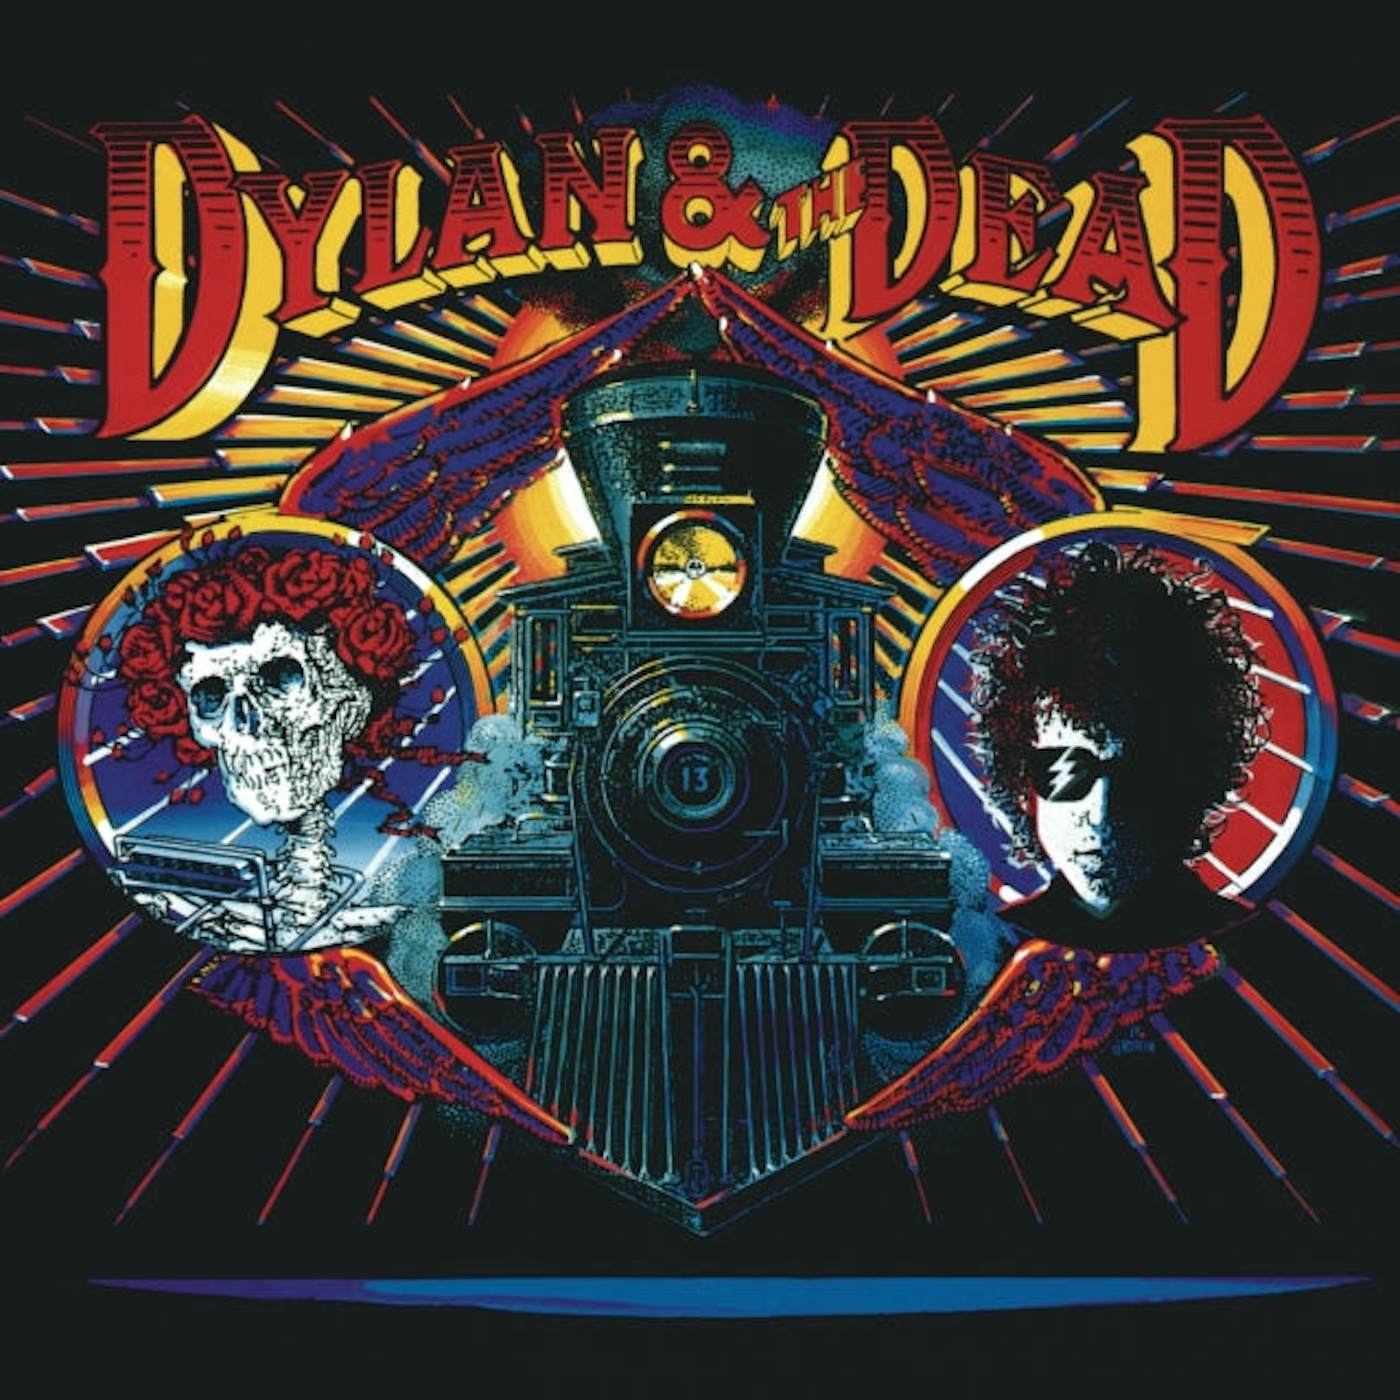 Bob Dylan & The Grateful Dead LP Vinyl Record - Dylan & The Dead